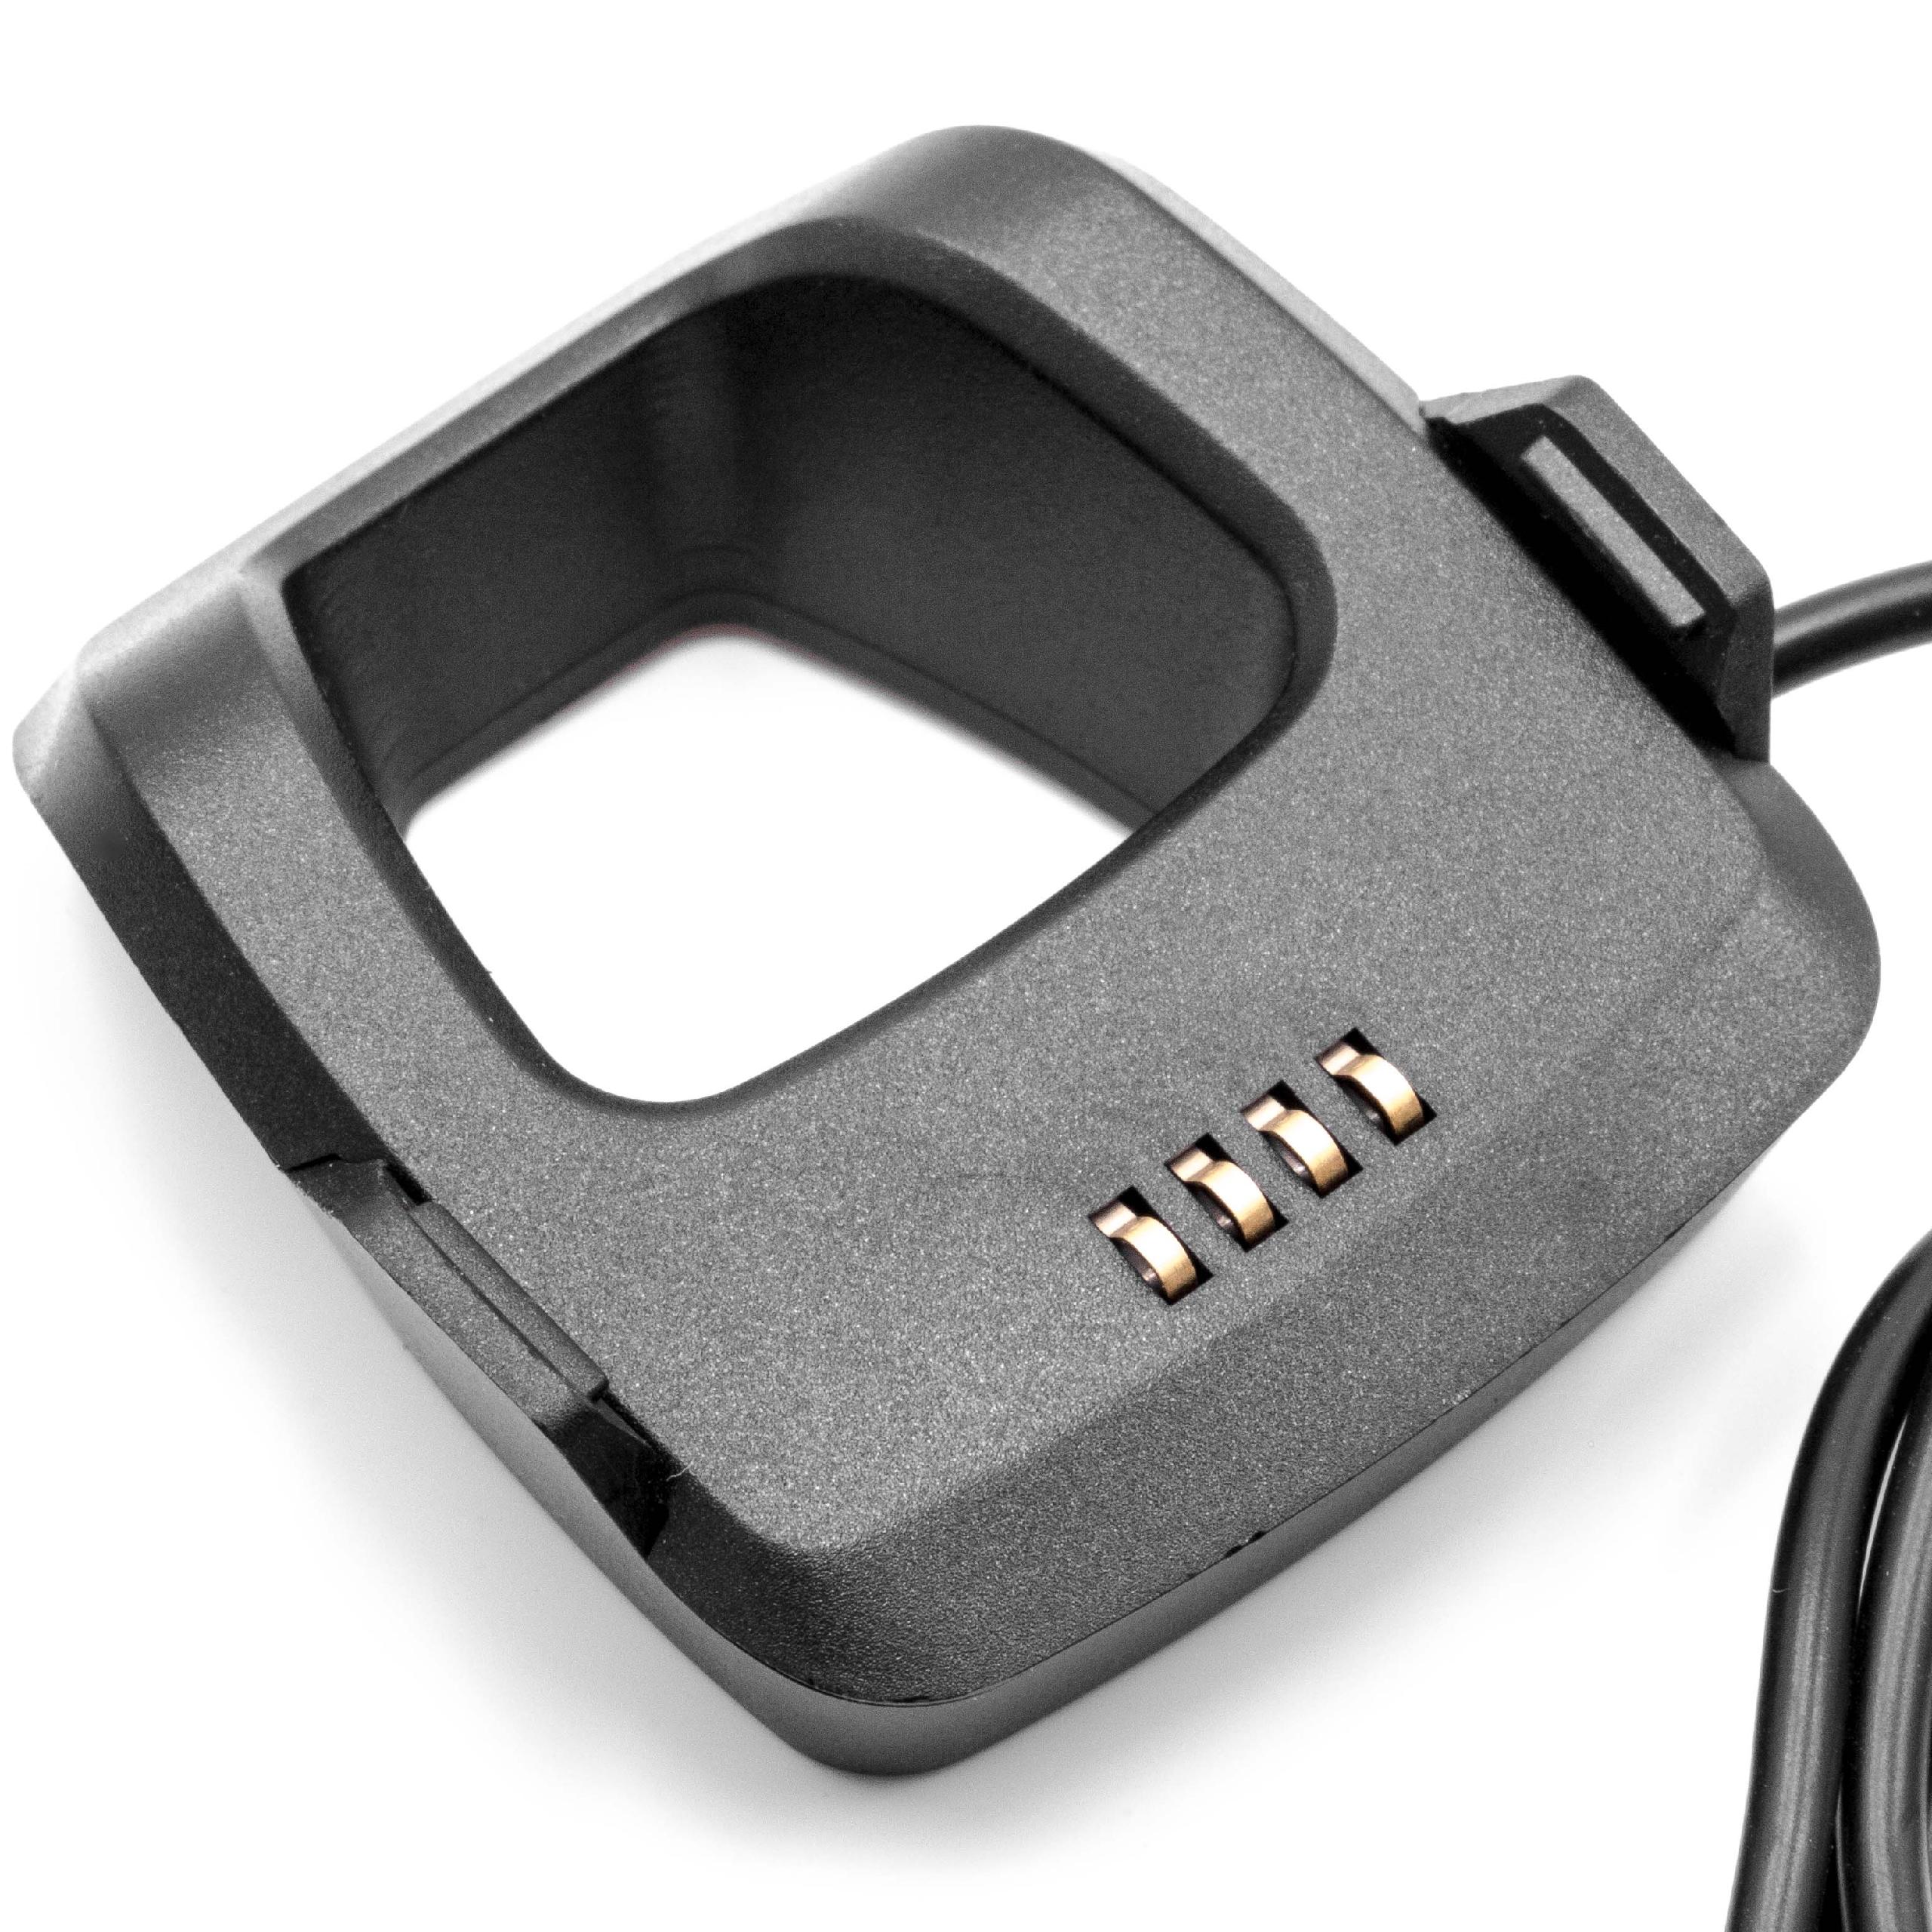 Cavo di ricarica USB per smartwatch Garmin Forerunner 205, 305 - nero 95 cm